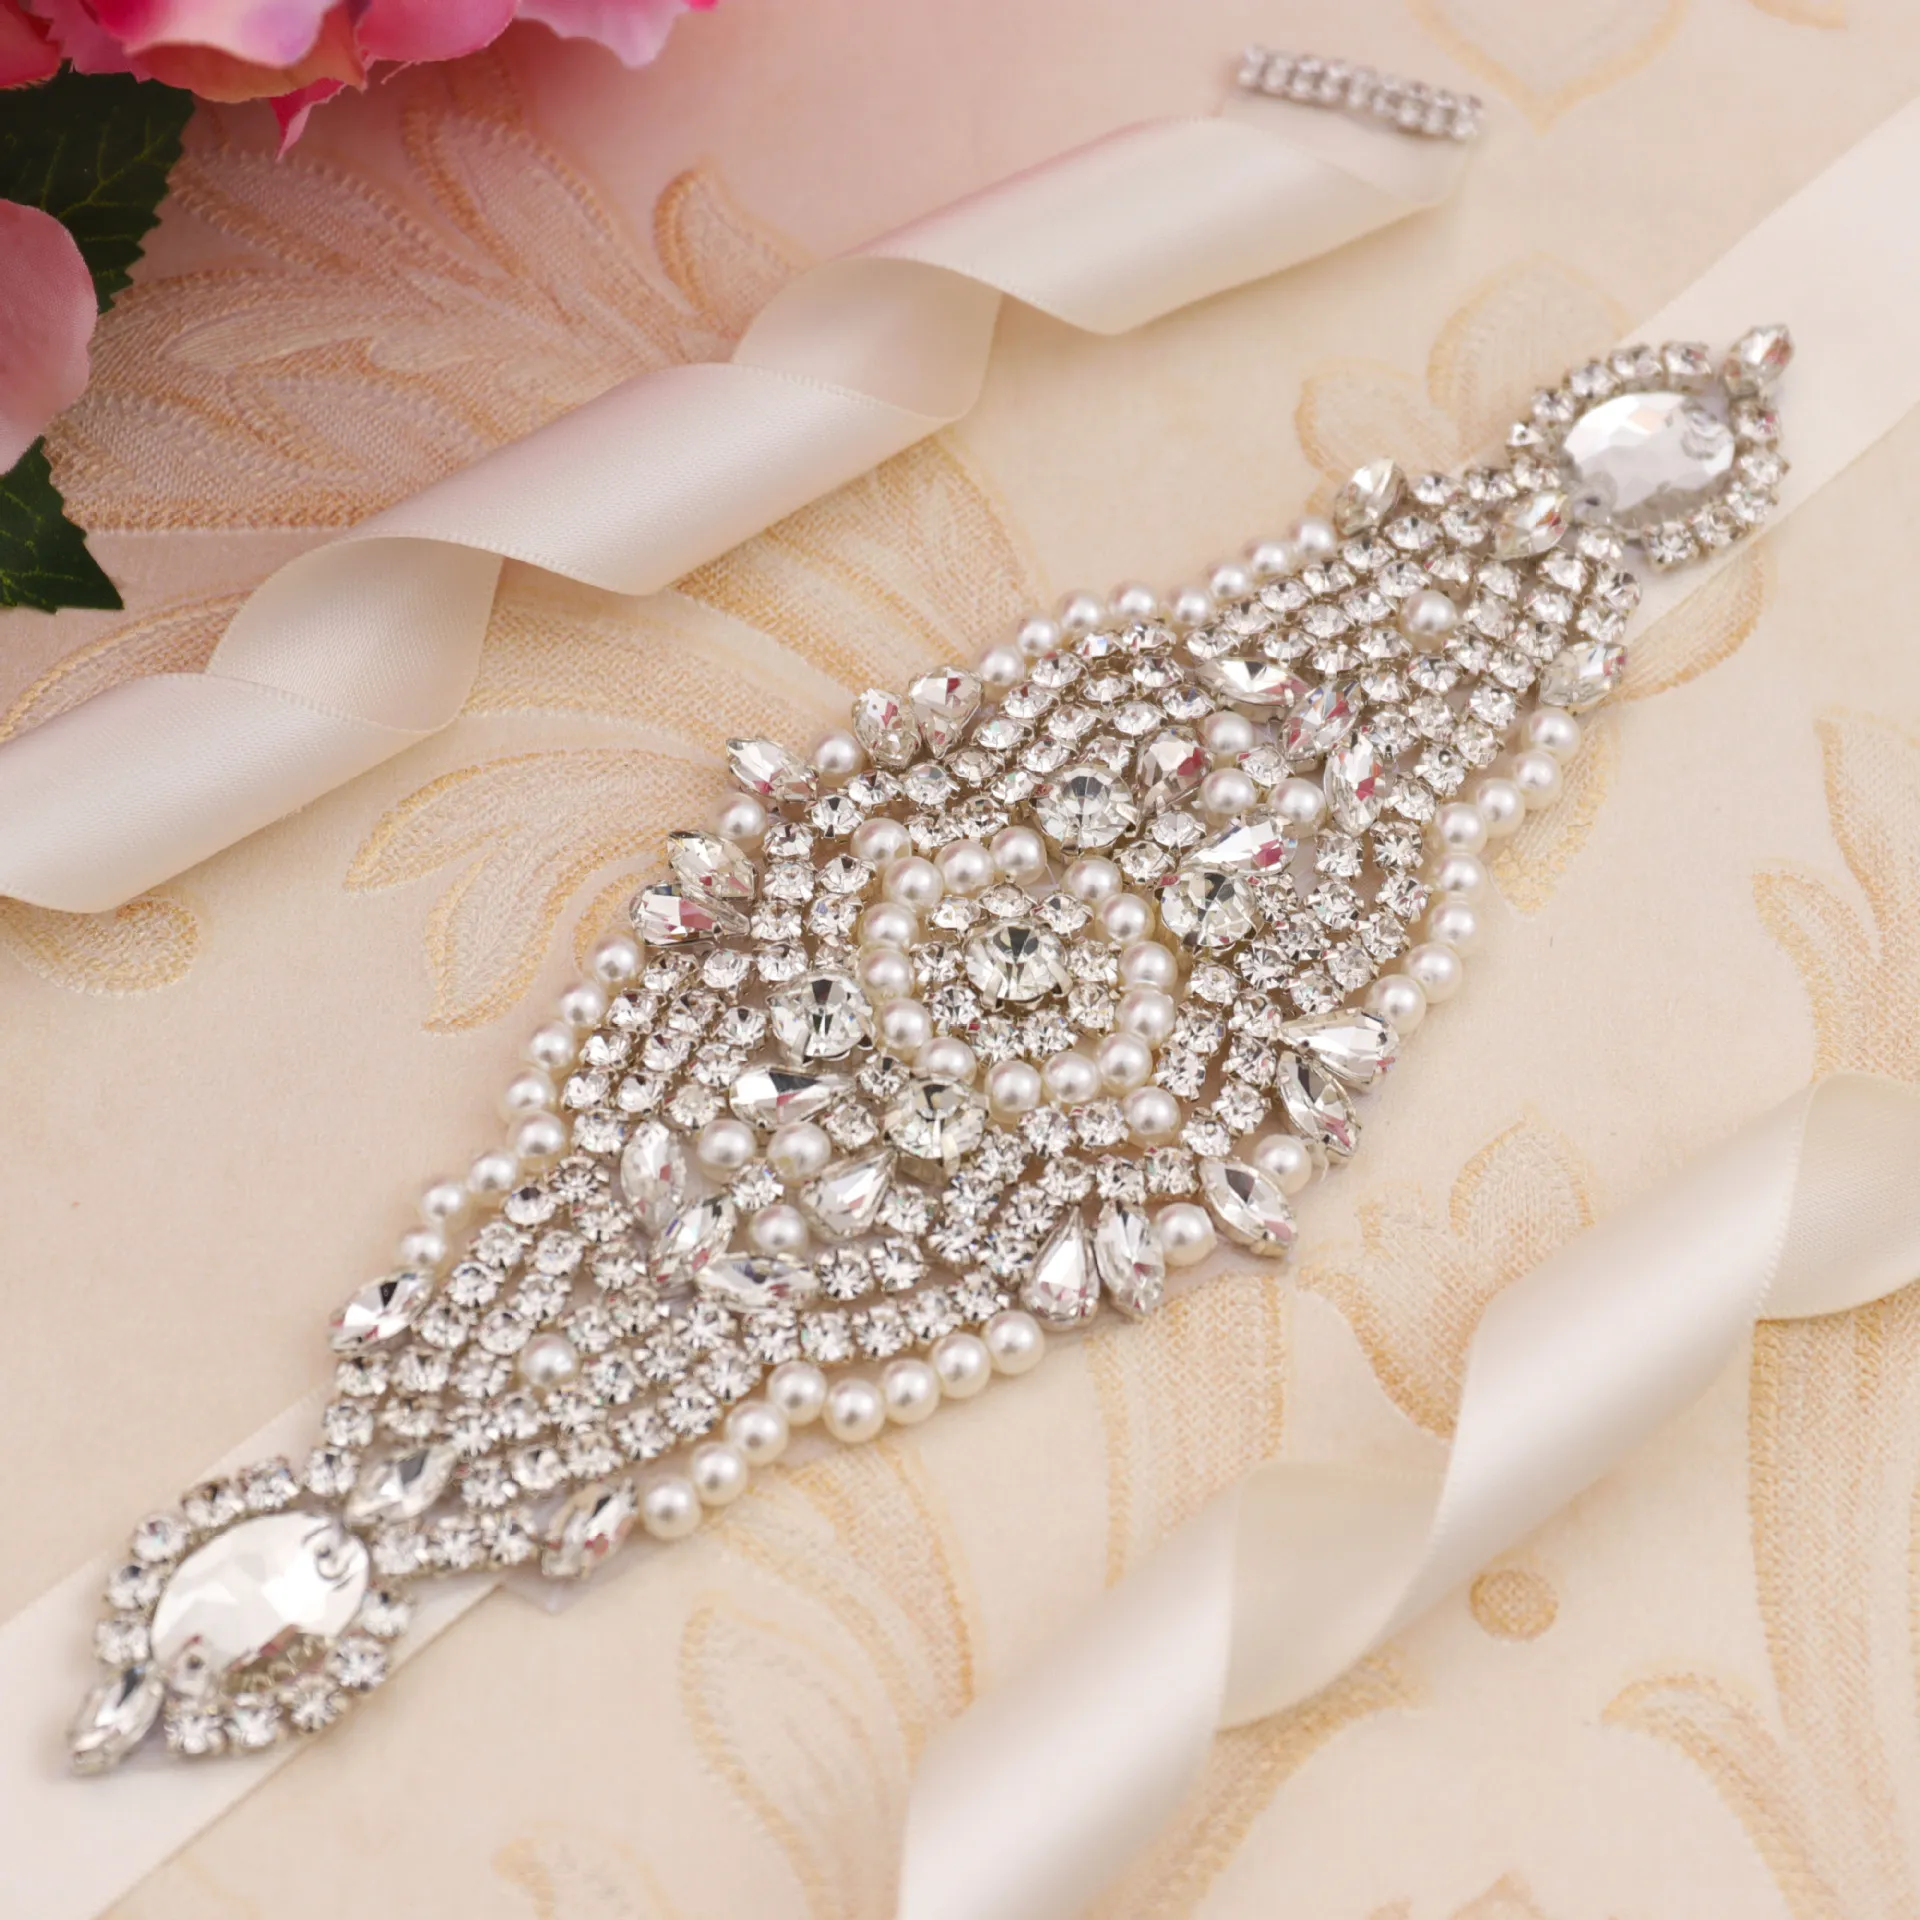 Luxe Rhinestones Lady Riem 2021 Big Size Pearls Crystal Bridal Sash Silver Diamond Bruid Riemen voor Bruiloft Lange Jurk sjerpen